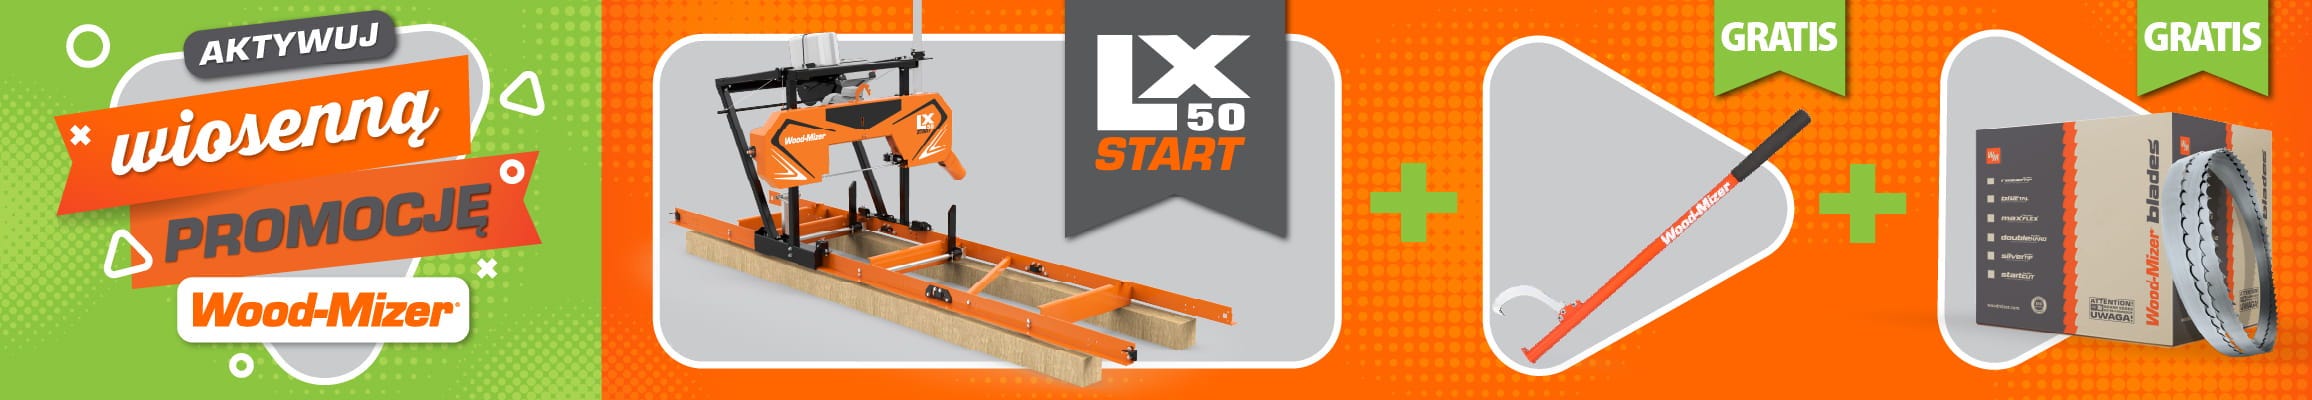 Promocja na trak taśmowy LX50START